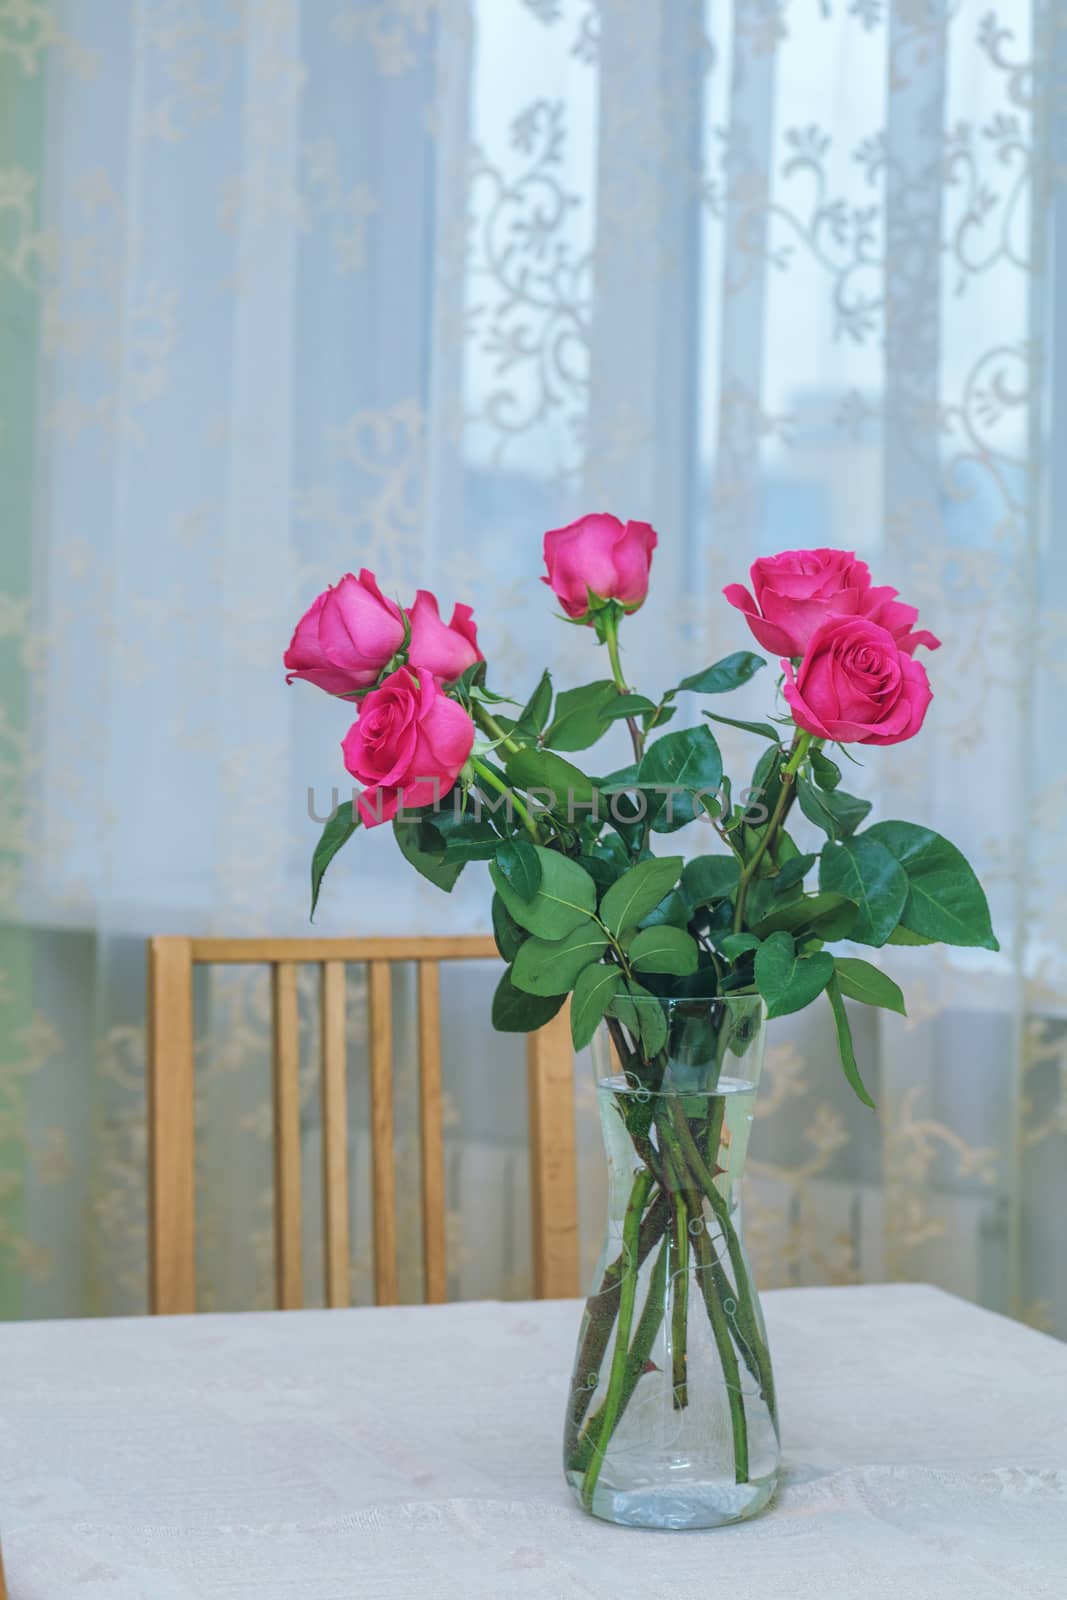 Seven pink roses by olga_sweet